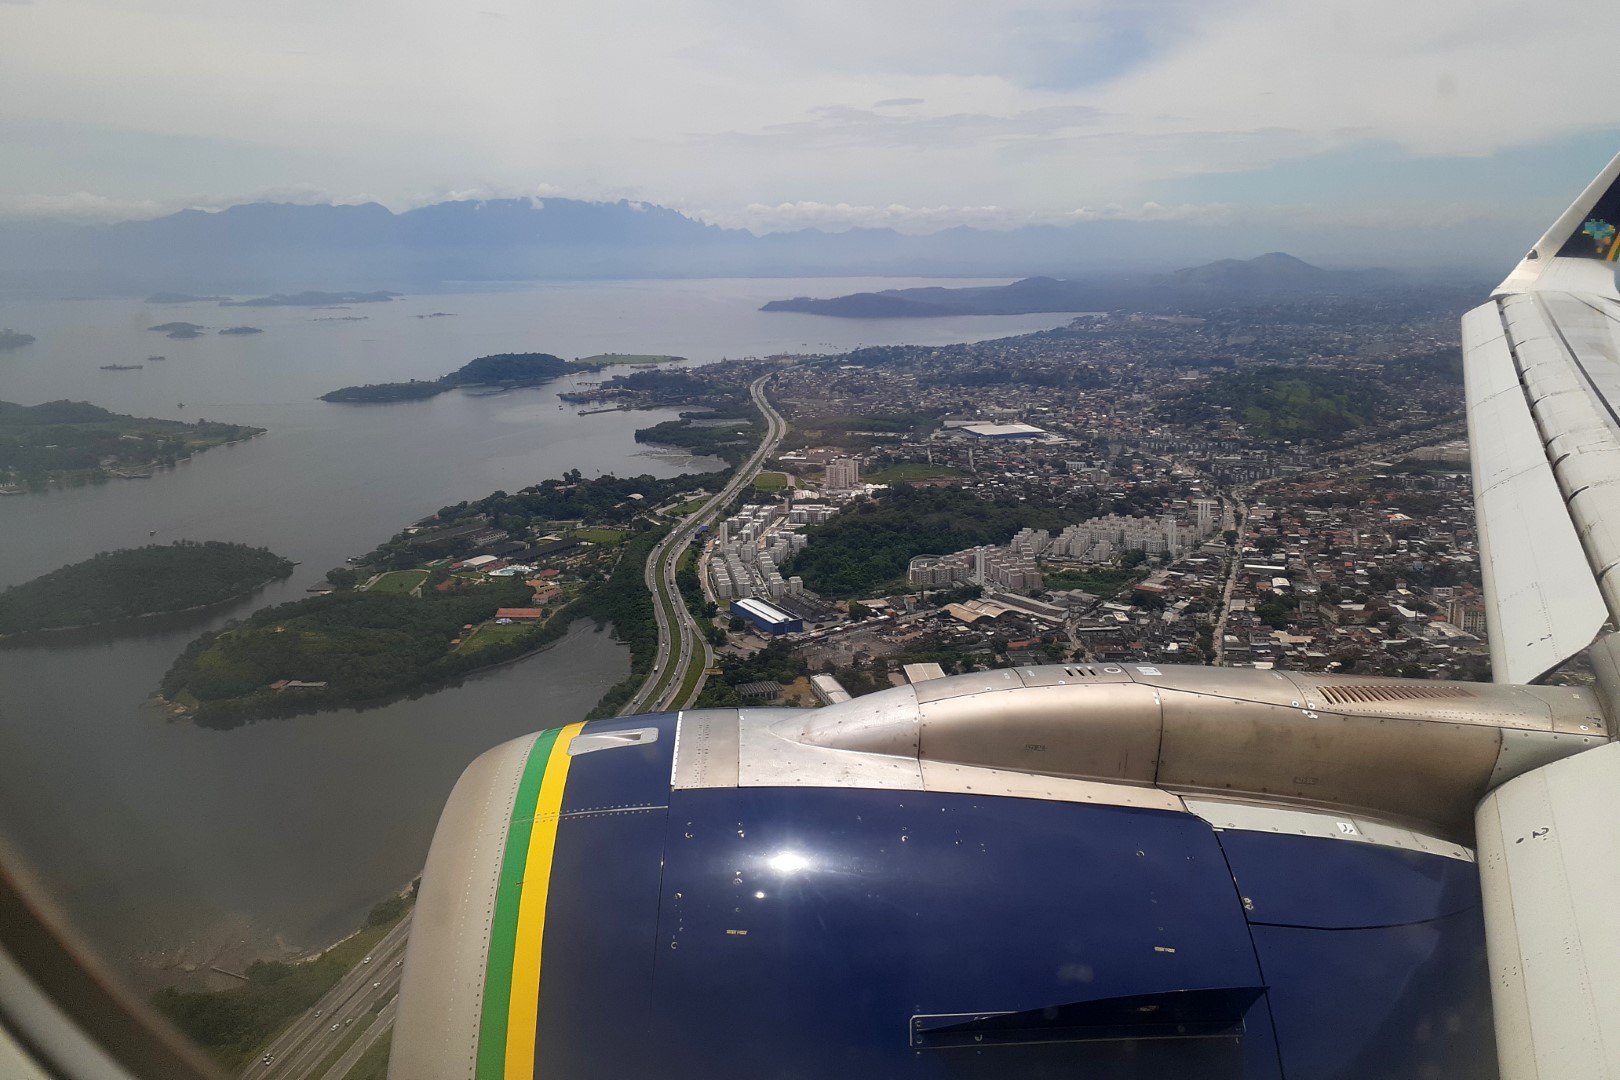 Landing in Santos Dumont airport, Rio de Janeiro